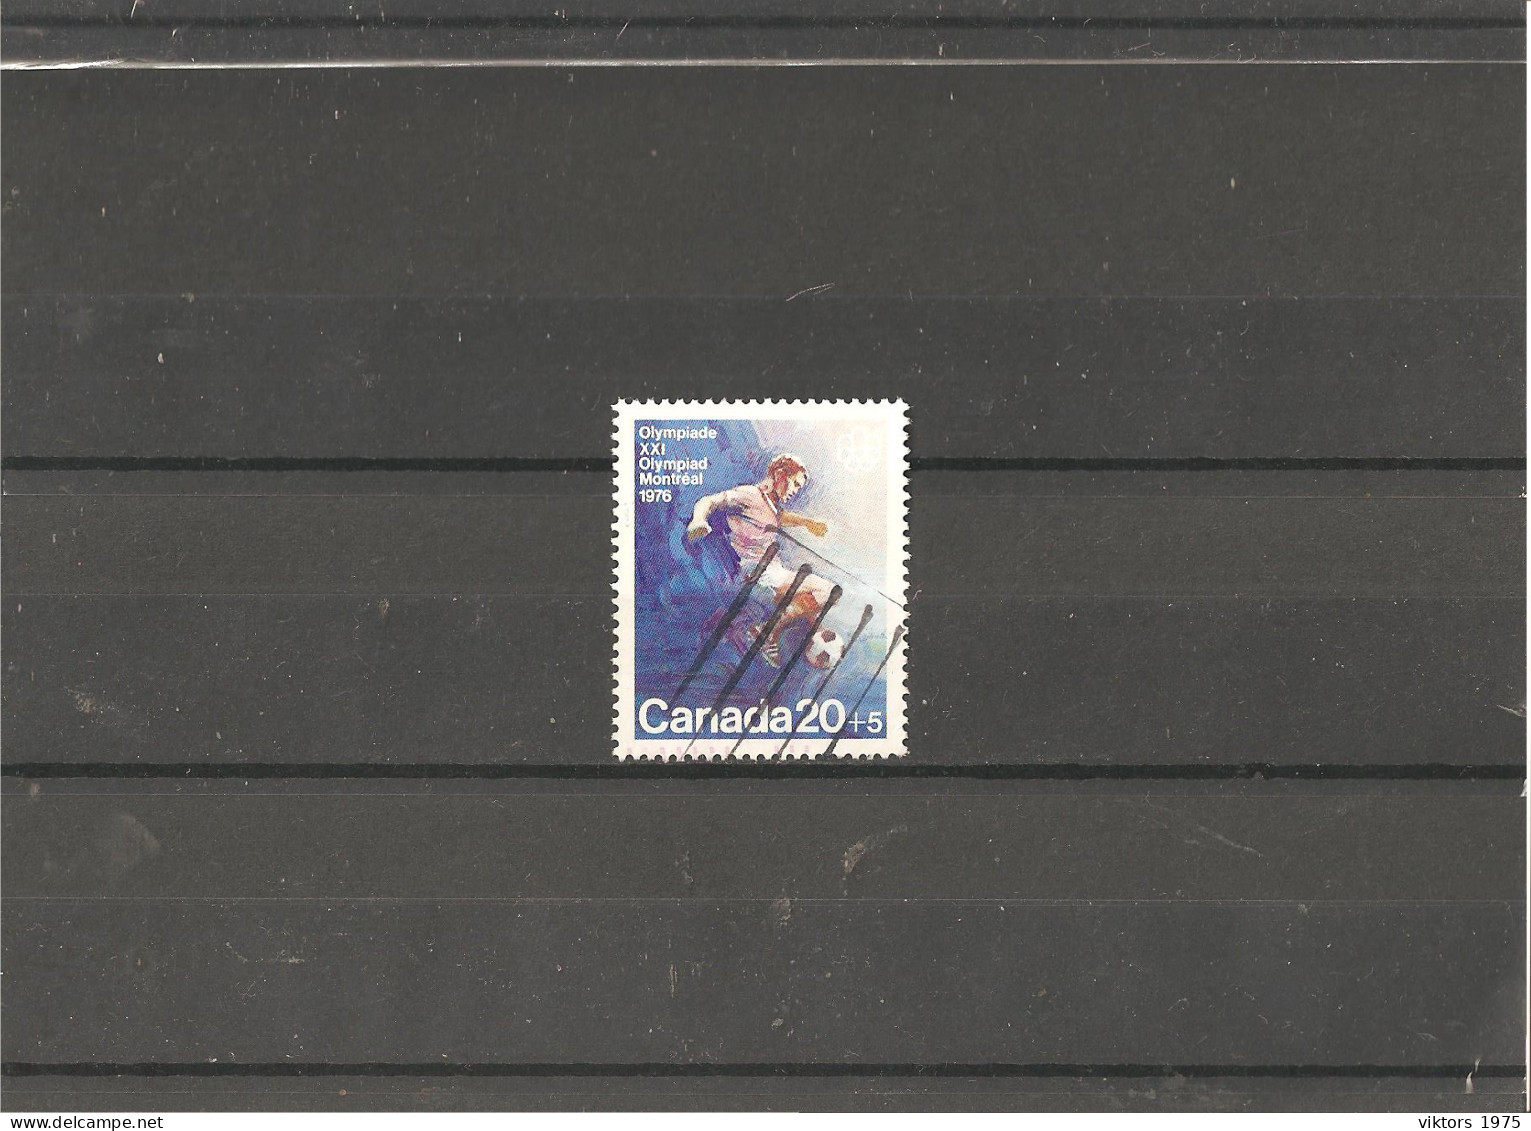 Used Stamp Nr.744 In Darnell Catalog - Usati